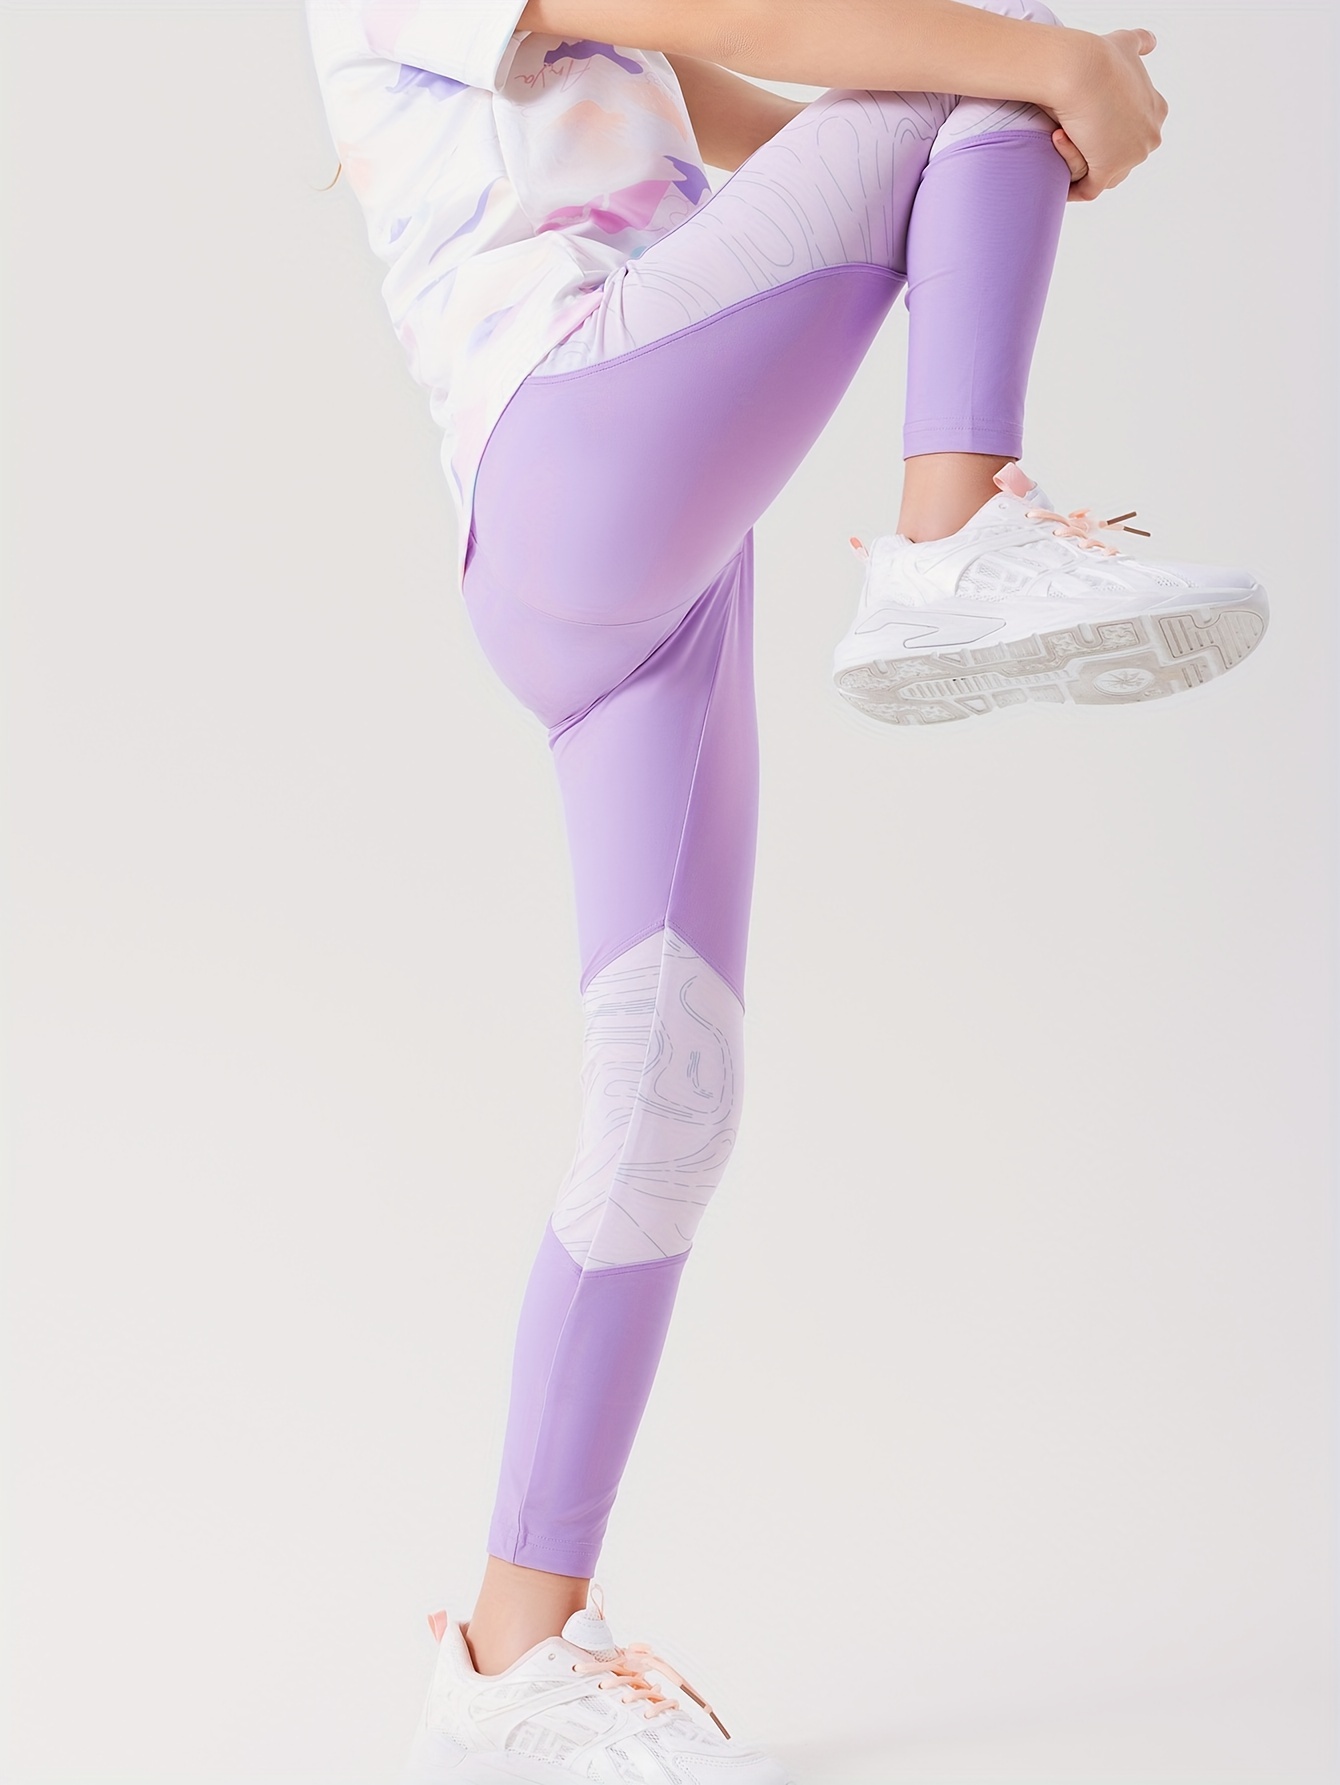 Purple Yoga Leggings  Sportswear for Kids and Teens